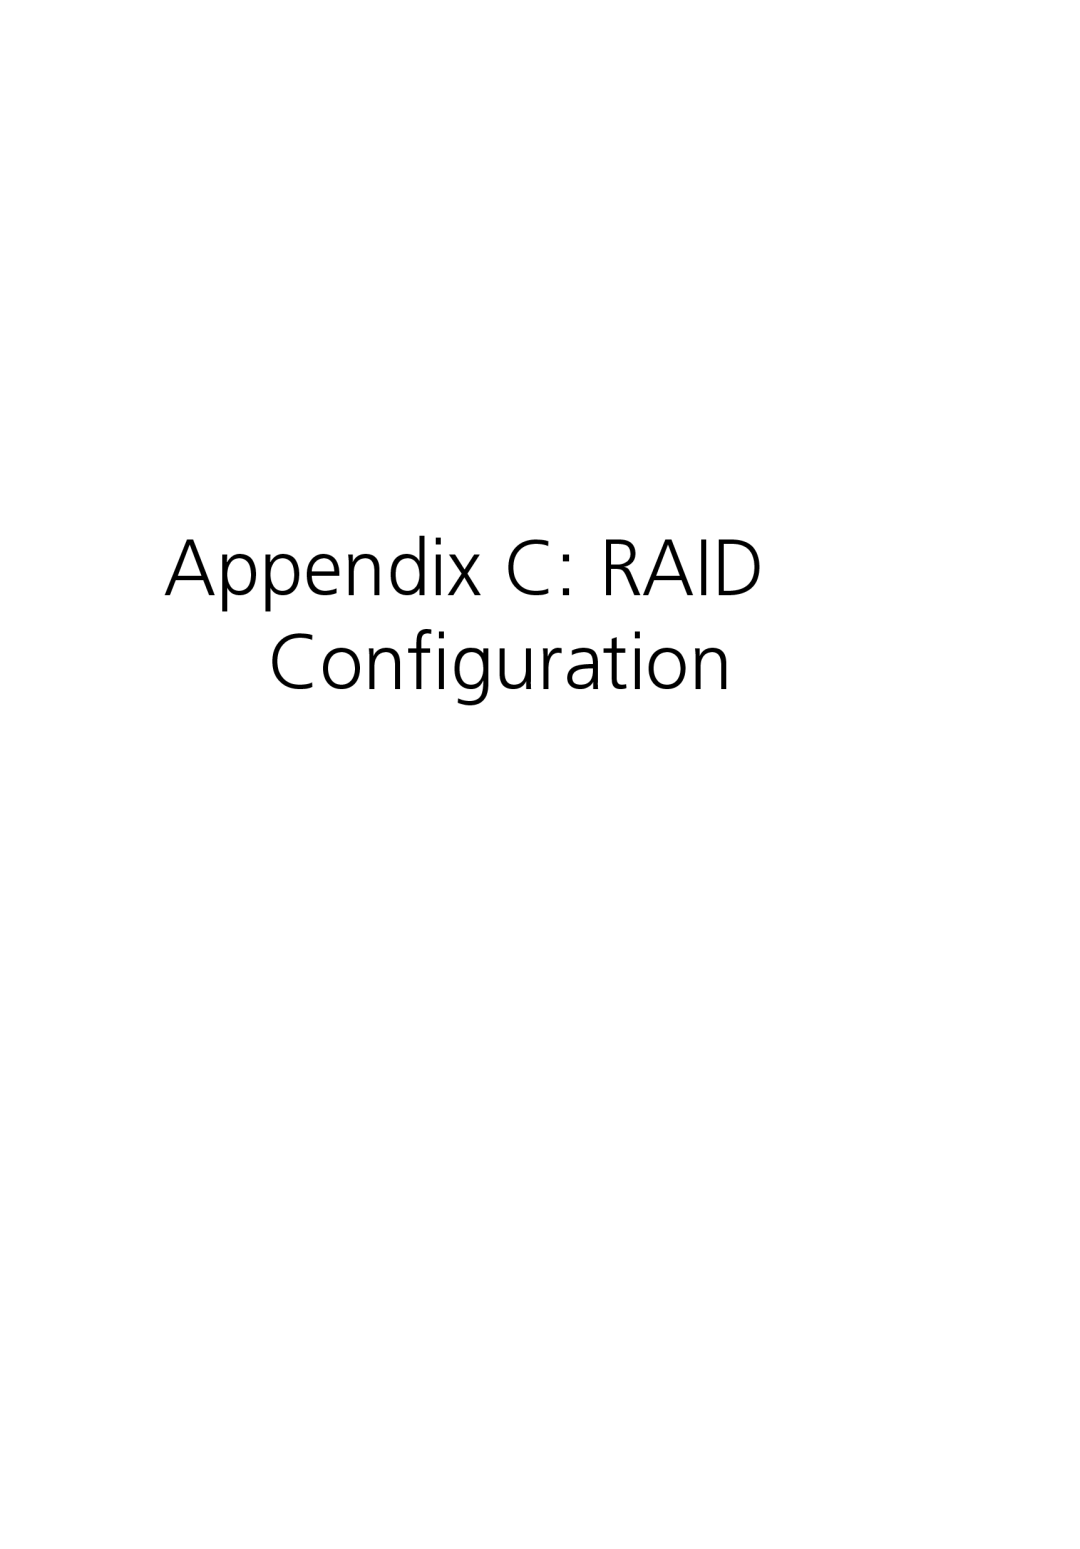 Acer Altos R710 manual Appendix C RAID Configuration 